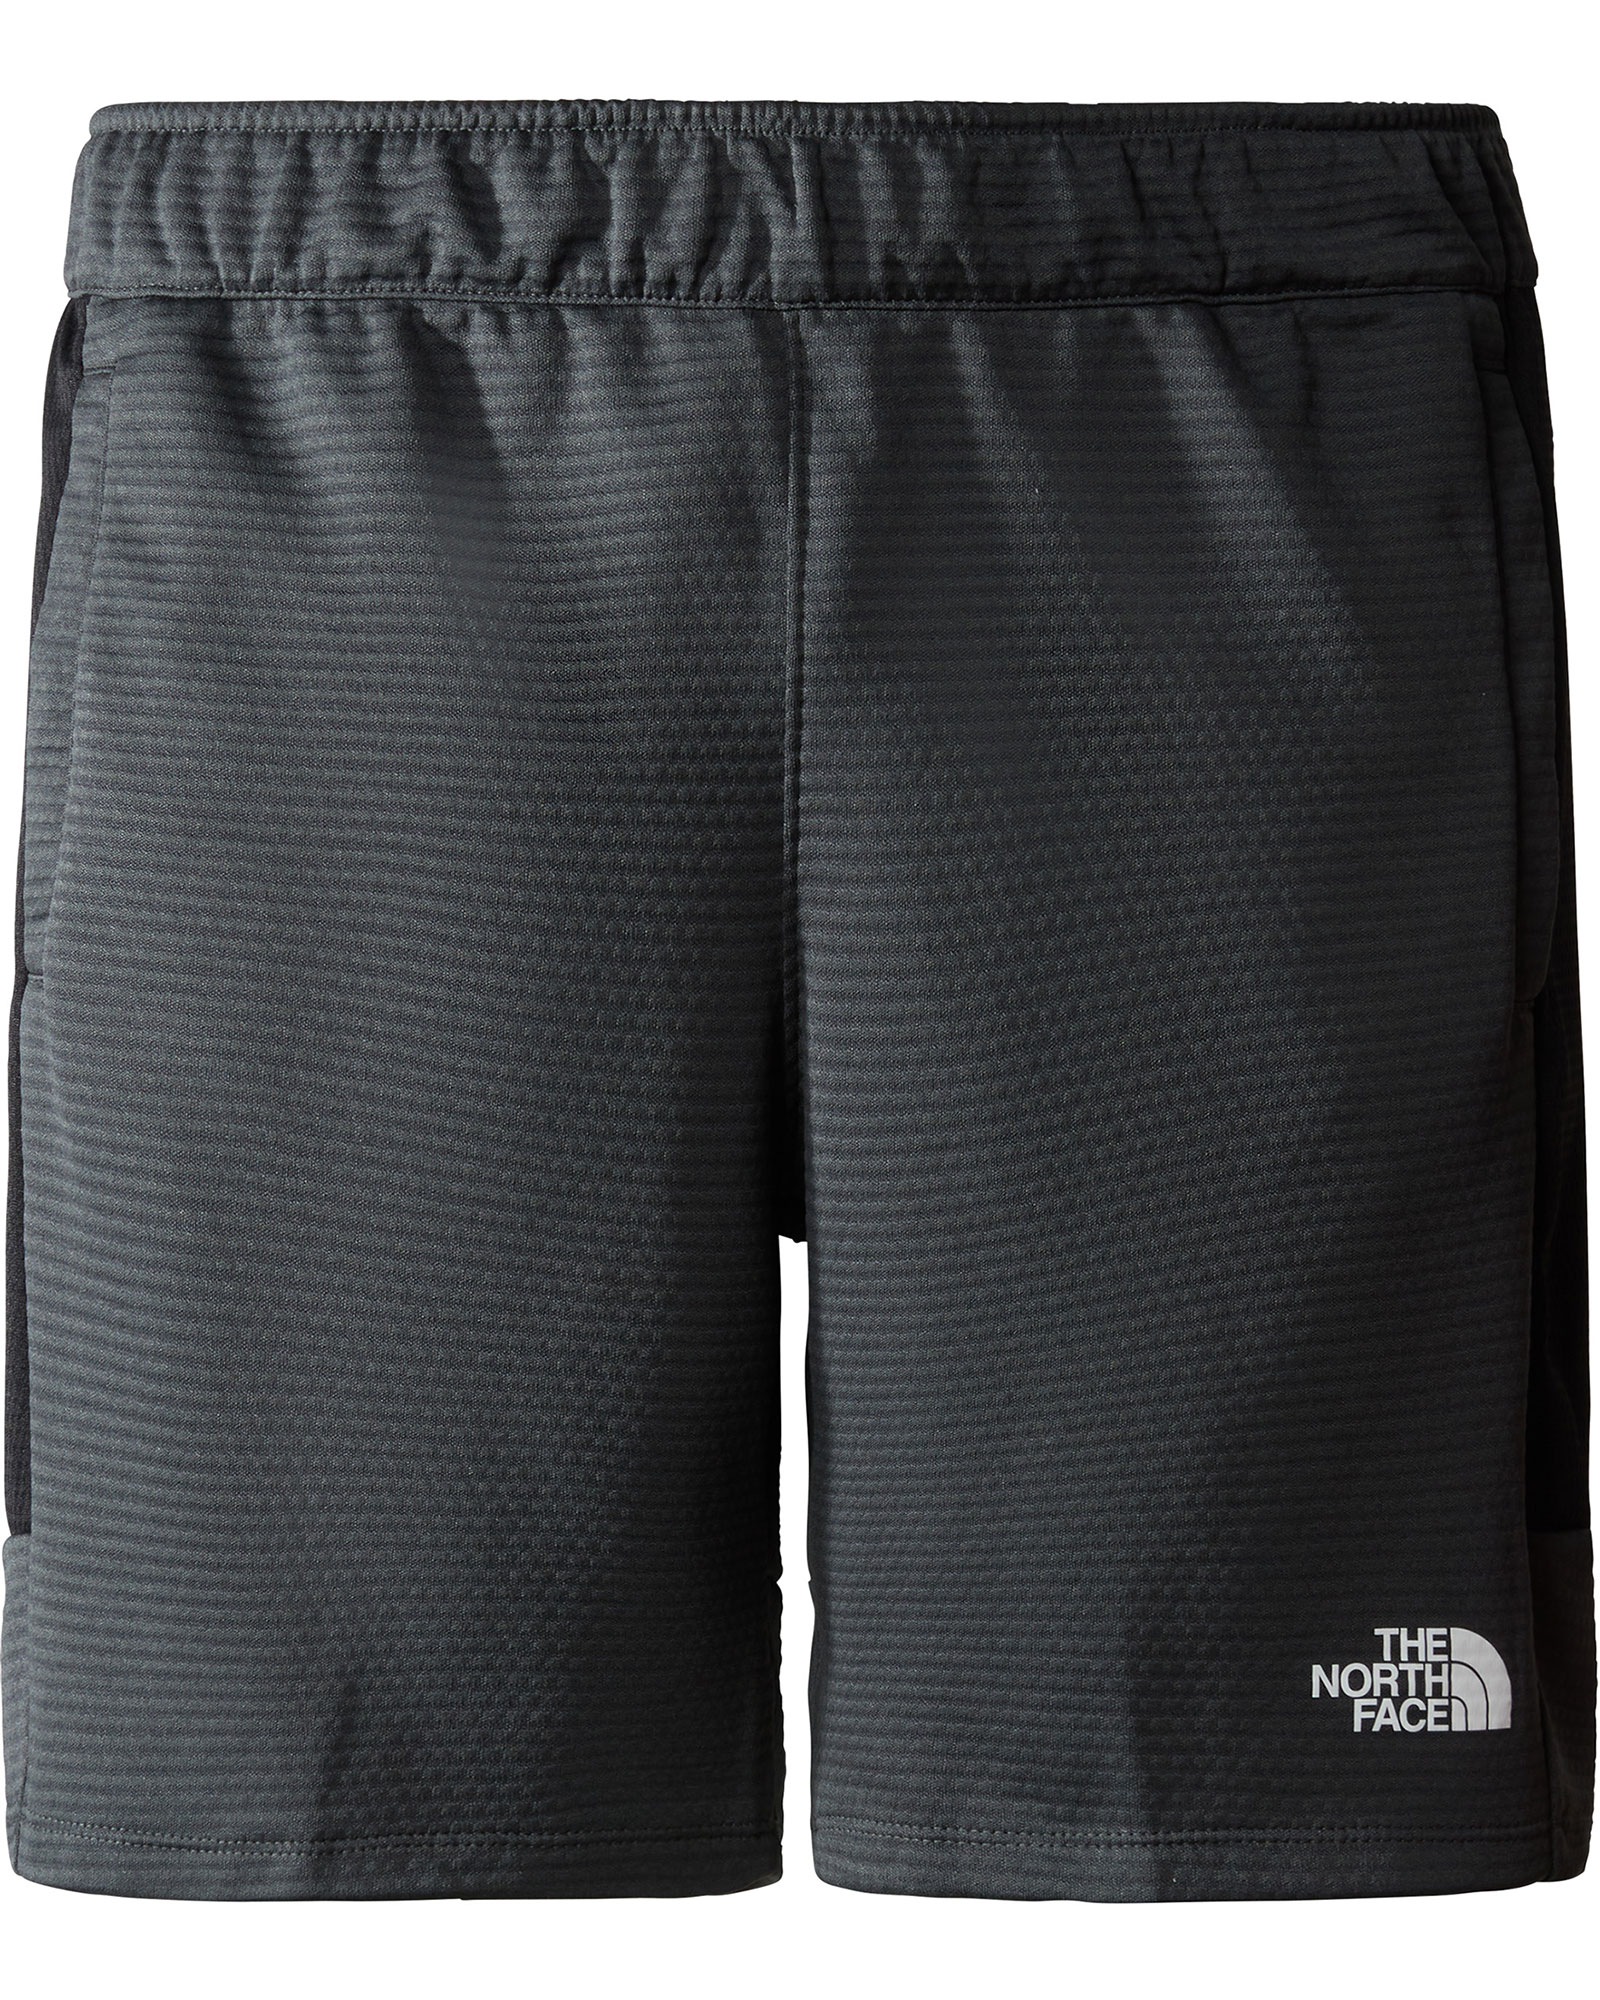 The North Face Men’s MA Fleece Shorts - Asphalt Grey-TNF Black XL